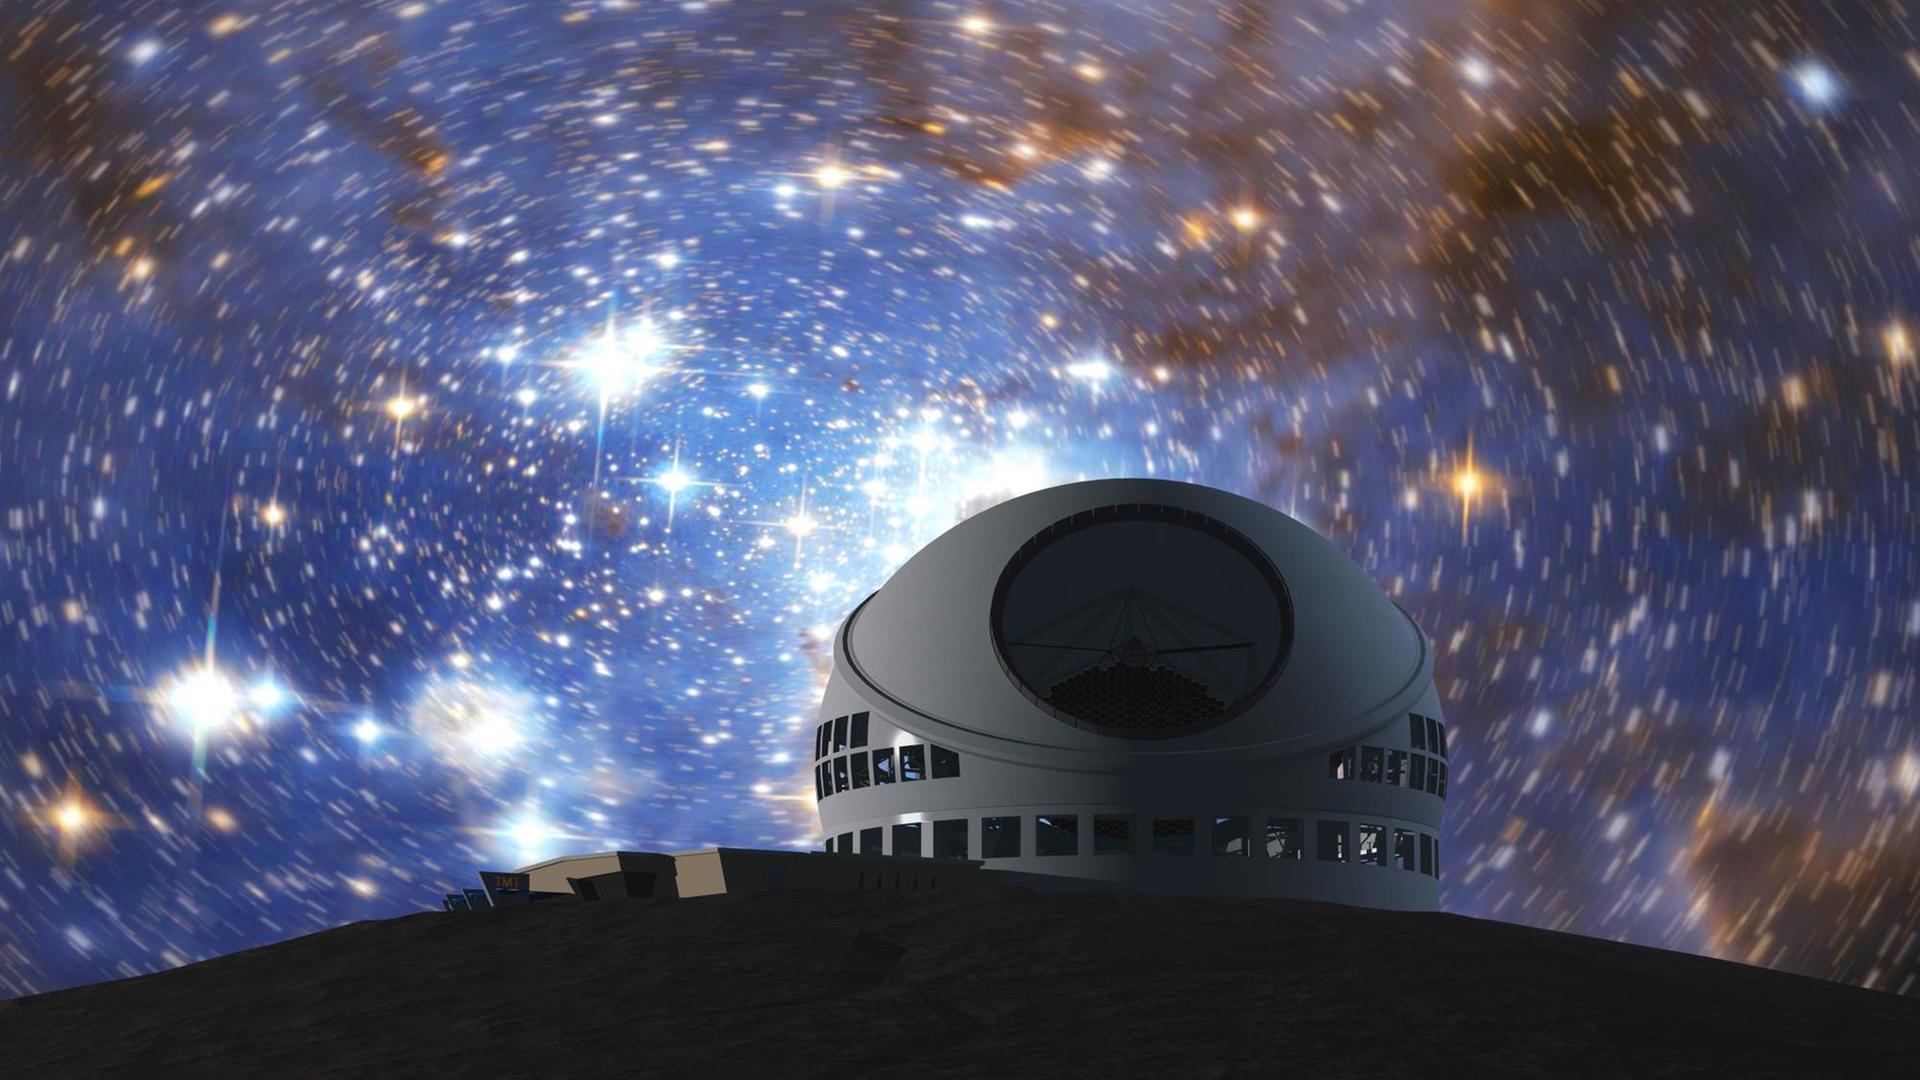 Das geplante Thirty-Meter-Teleskop (TMT) auf dem Vulkan Mauna Kea/Hawaii; Illustration des geplanten Teleskops